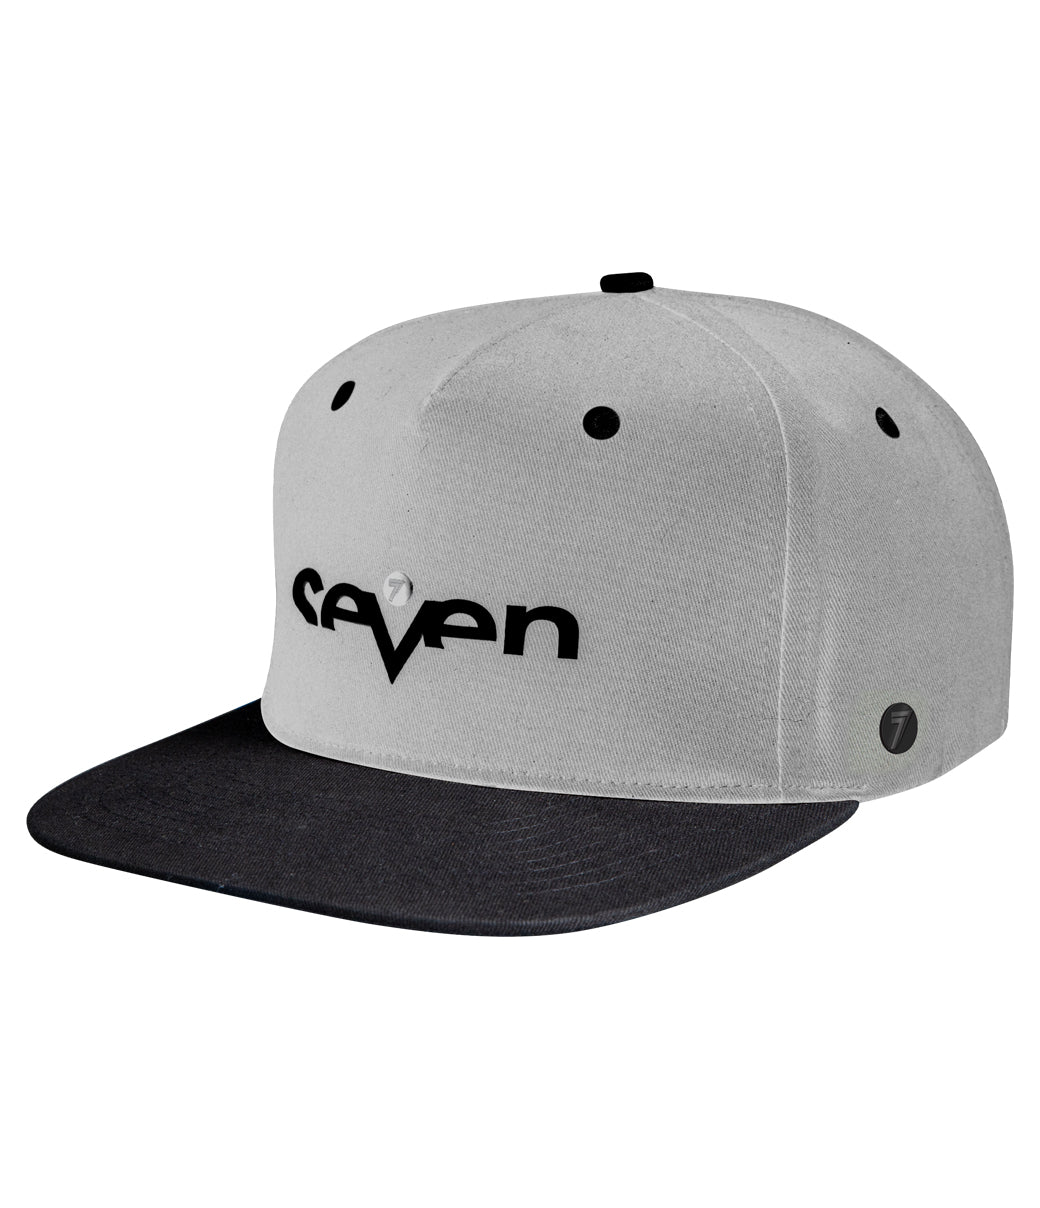 Youth Micro Brand Hat Gray/Black